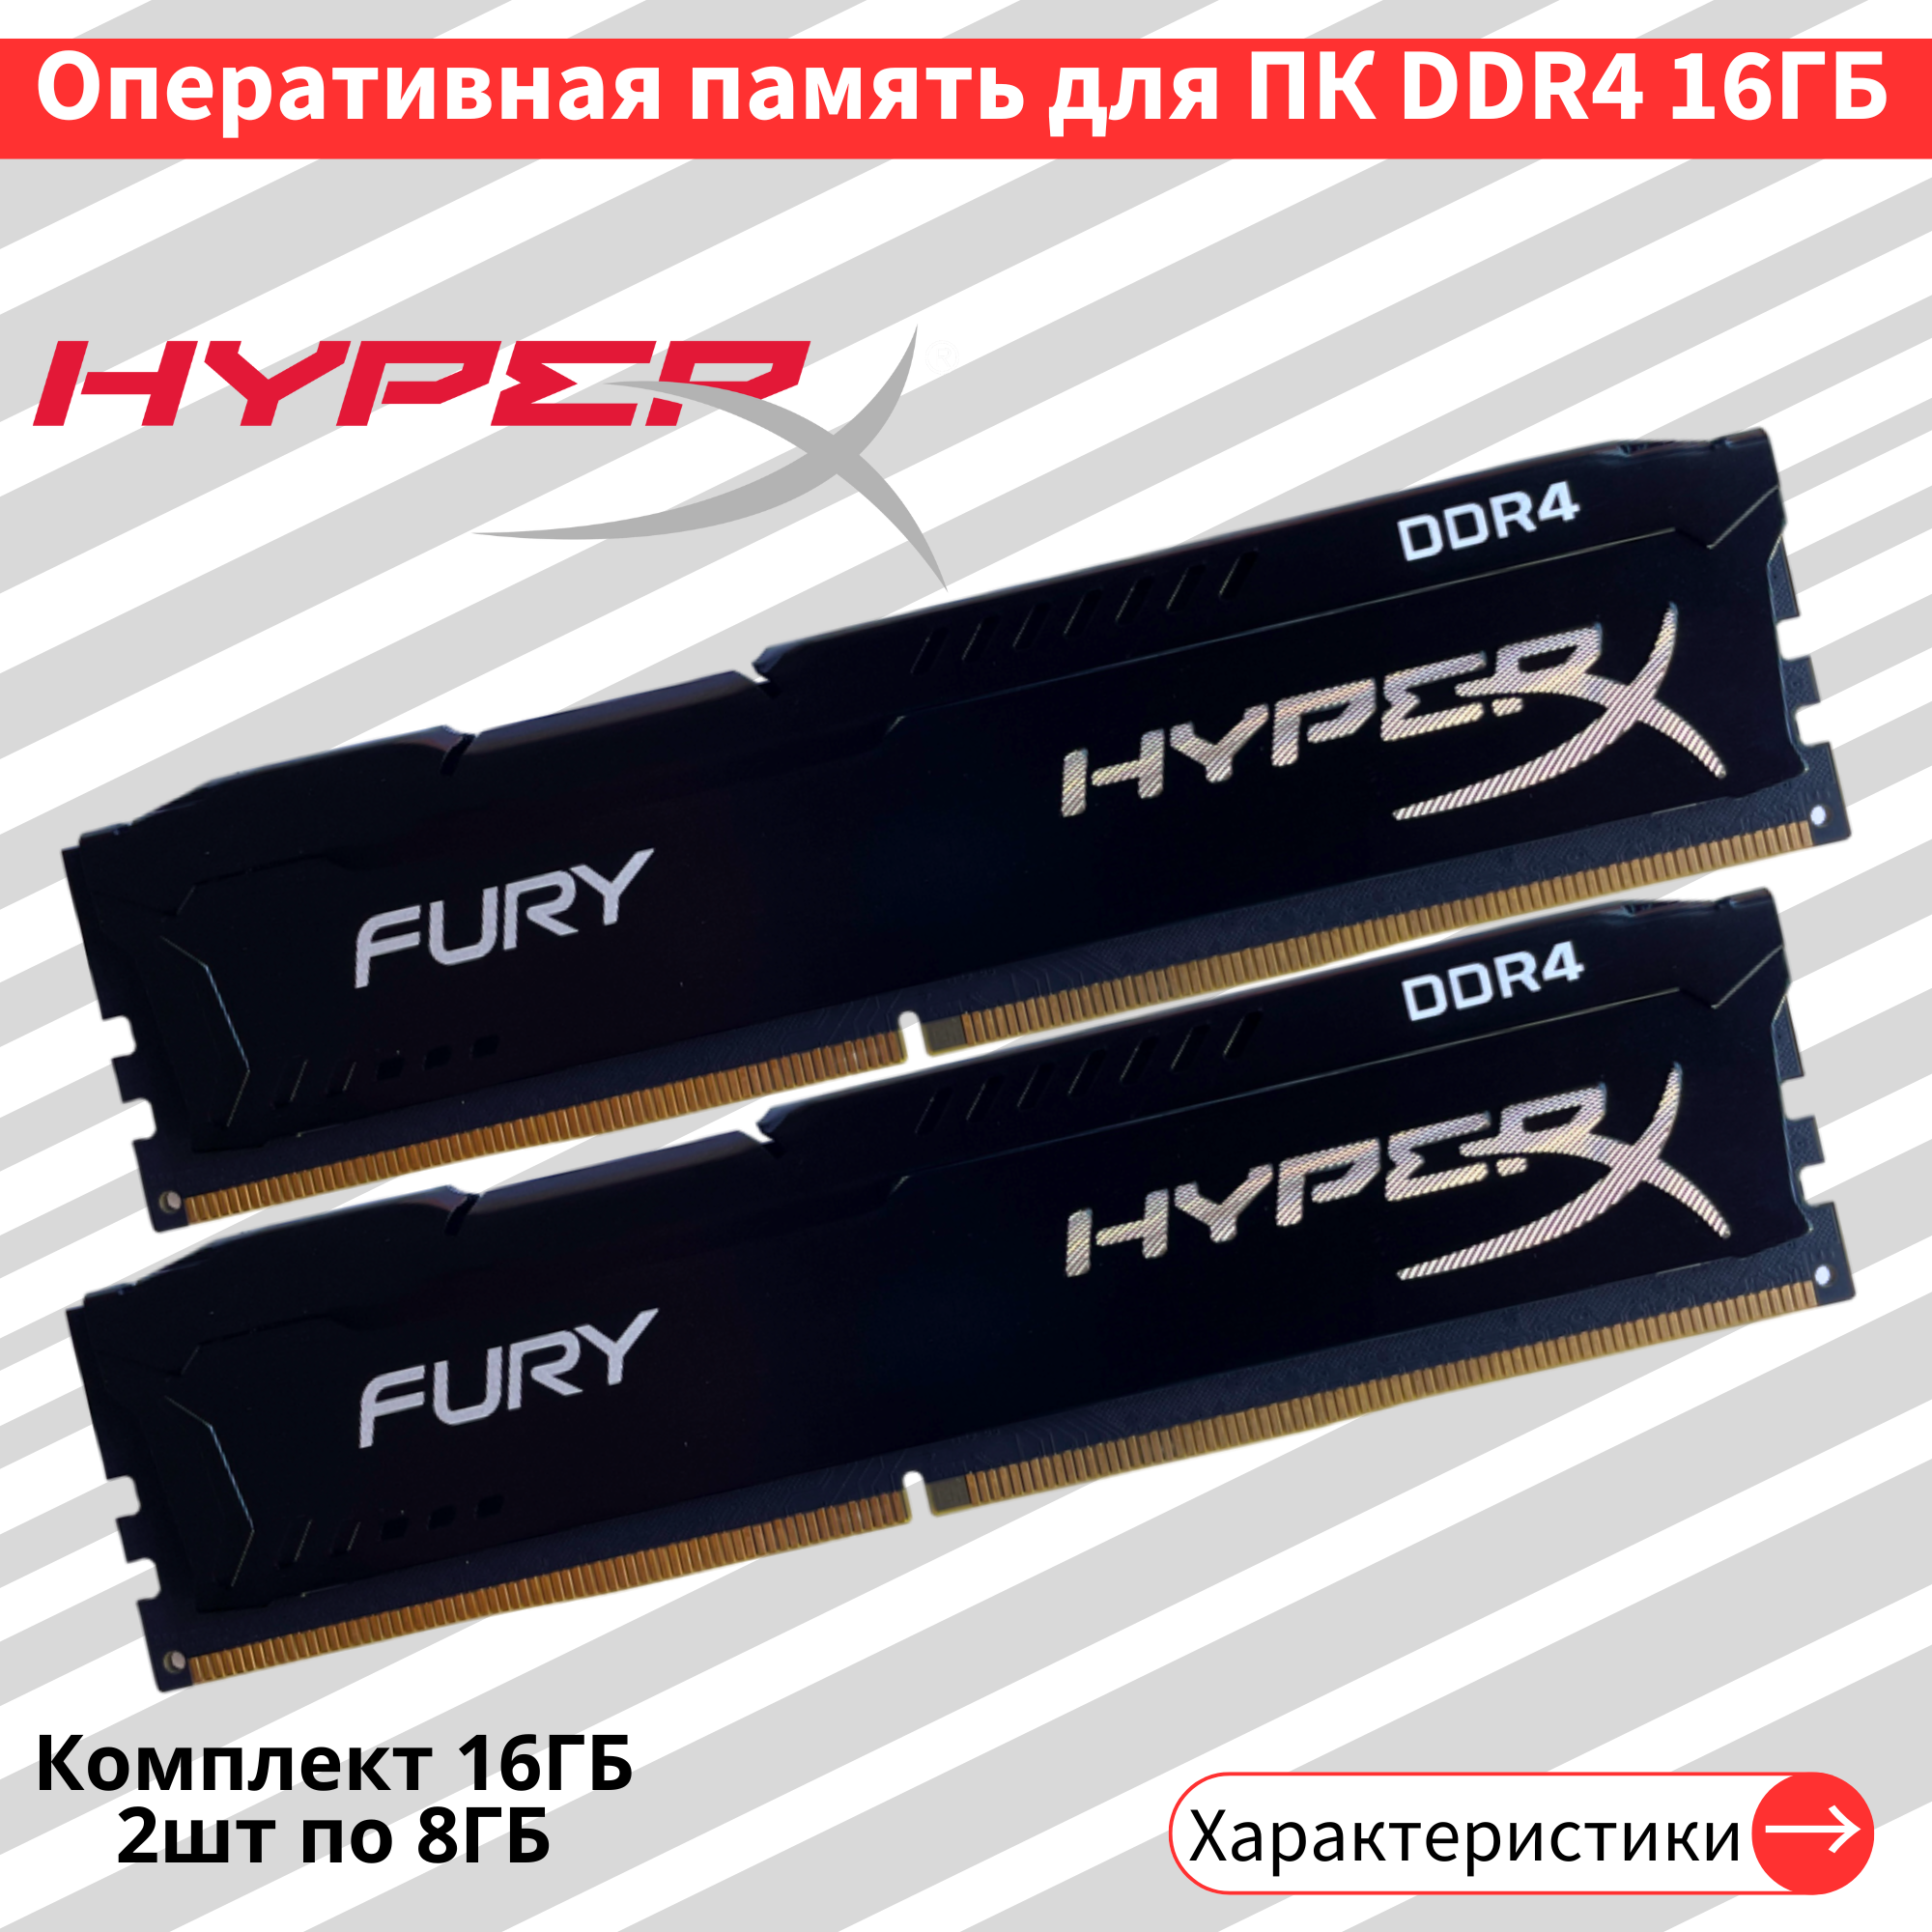 Комплект оперативной памяти HyperX Fury 16 ГБ DDR4 3200 МГц DIMM CL16 2шт по 8ГБ